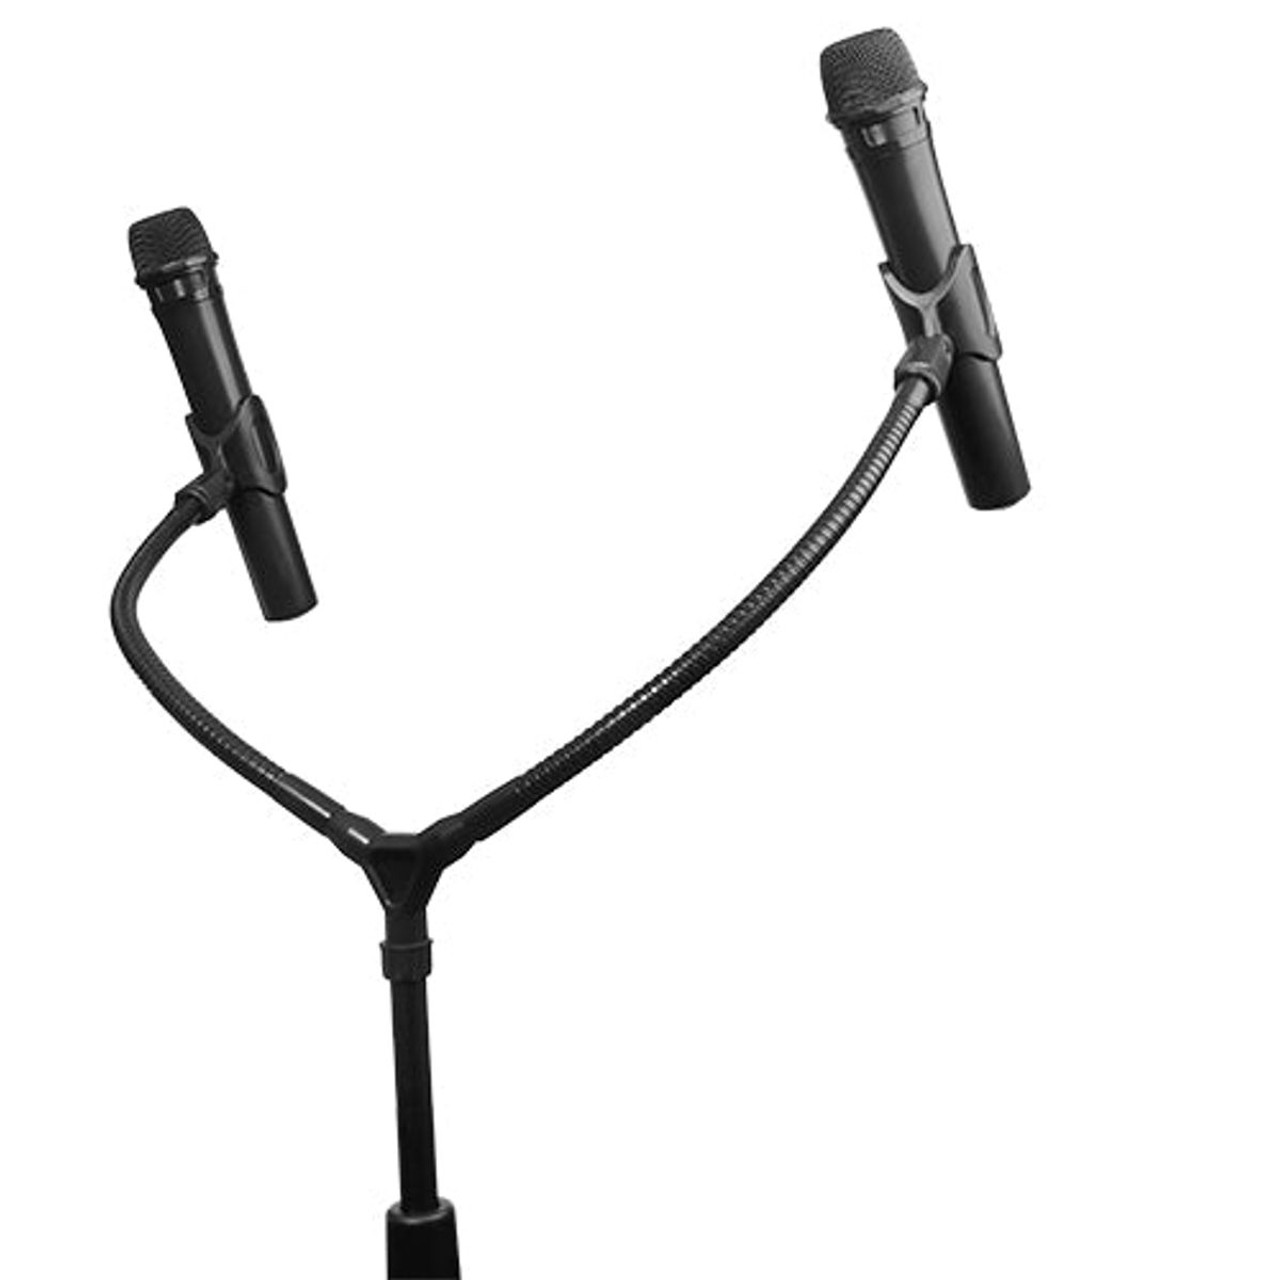 IQ Sound® Portable PA System Karaoke Speaker product image